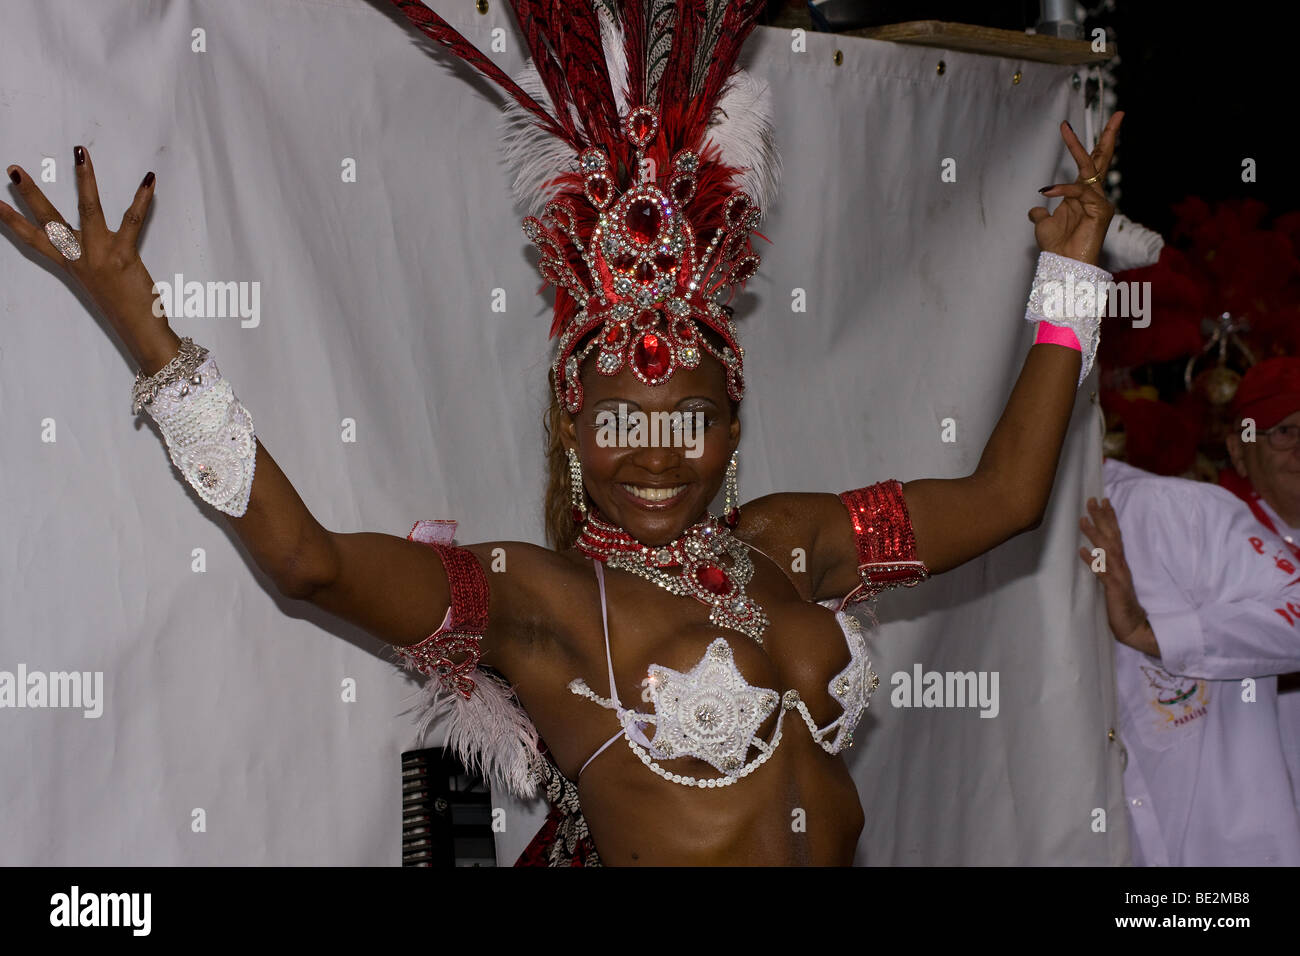 Samba dancer brasil hi-res stock photography and images - Page 12 - Alamy